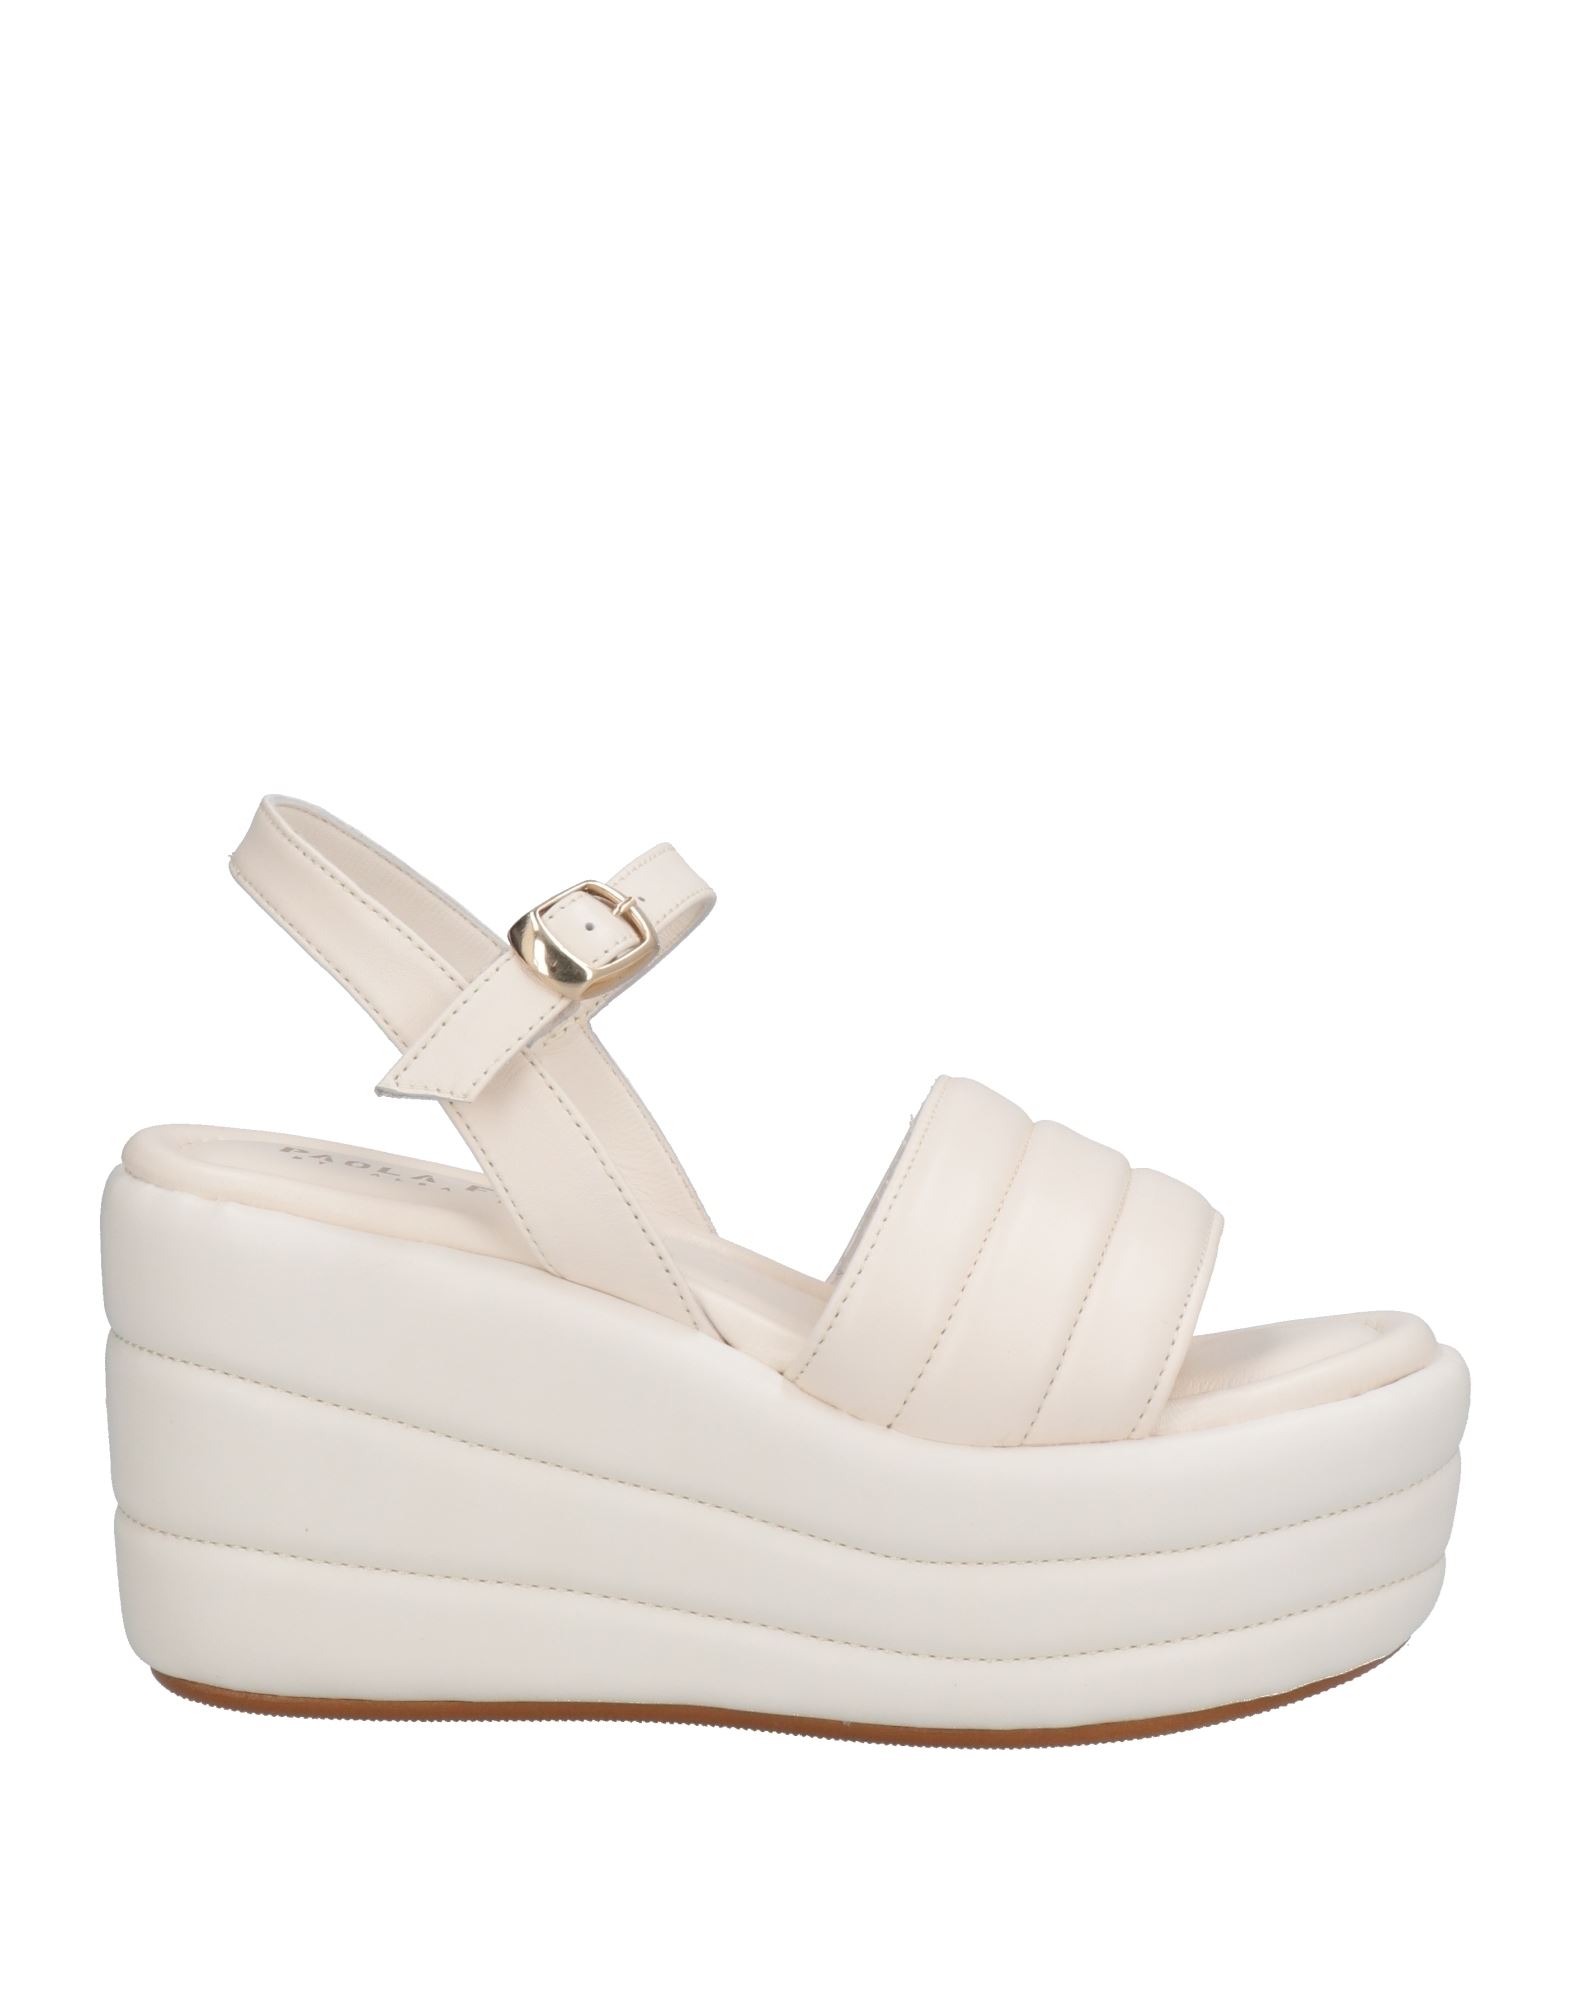 Paola Ferri Sandals In White